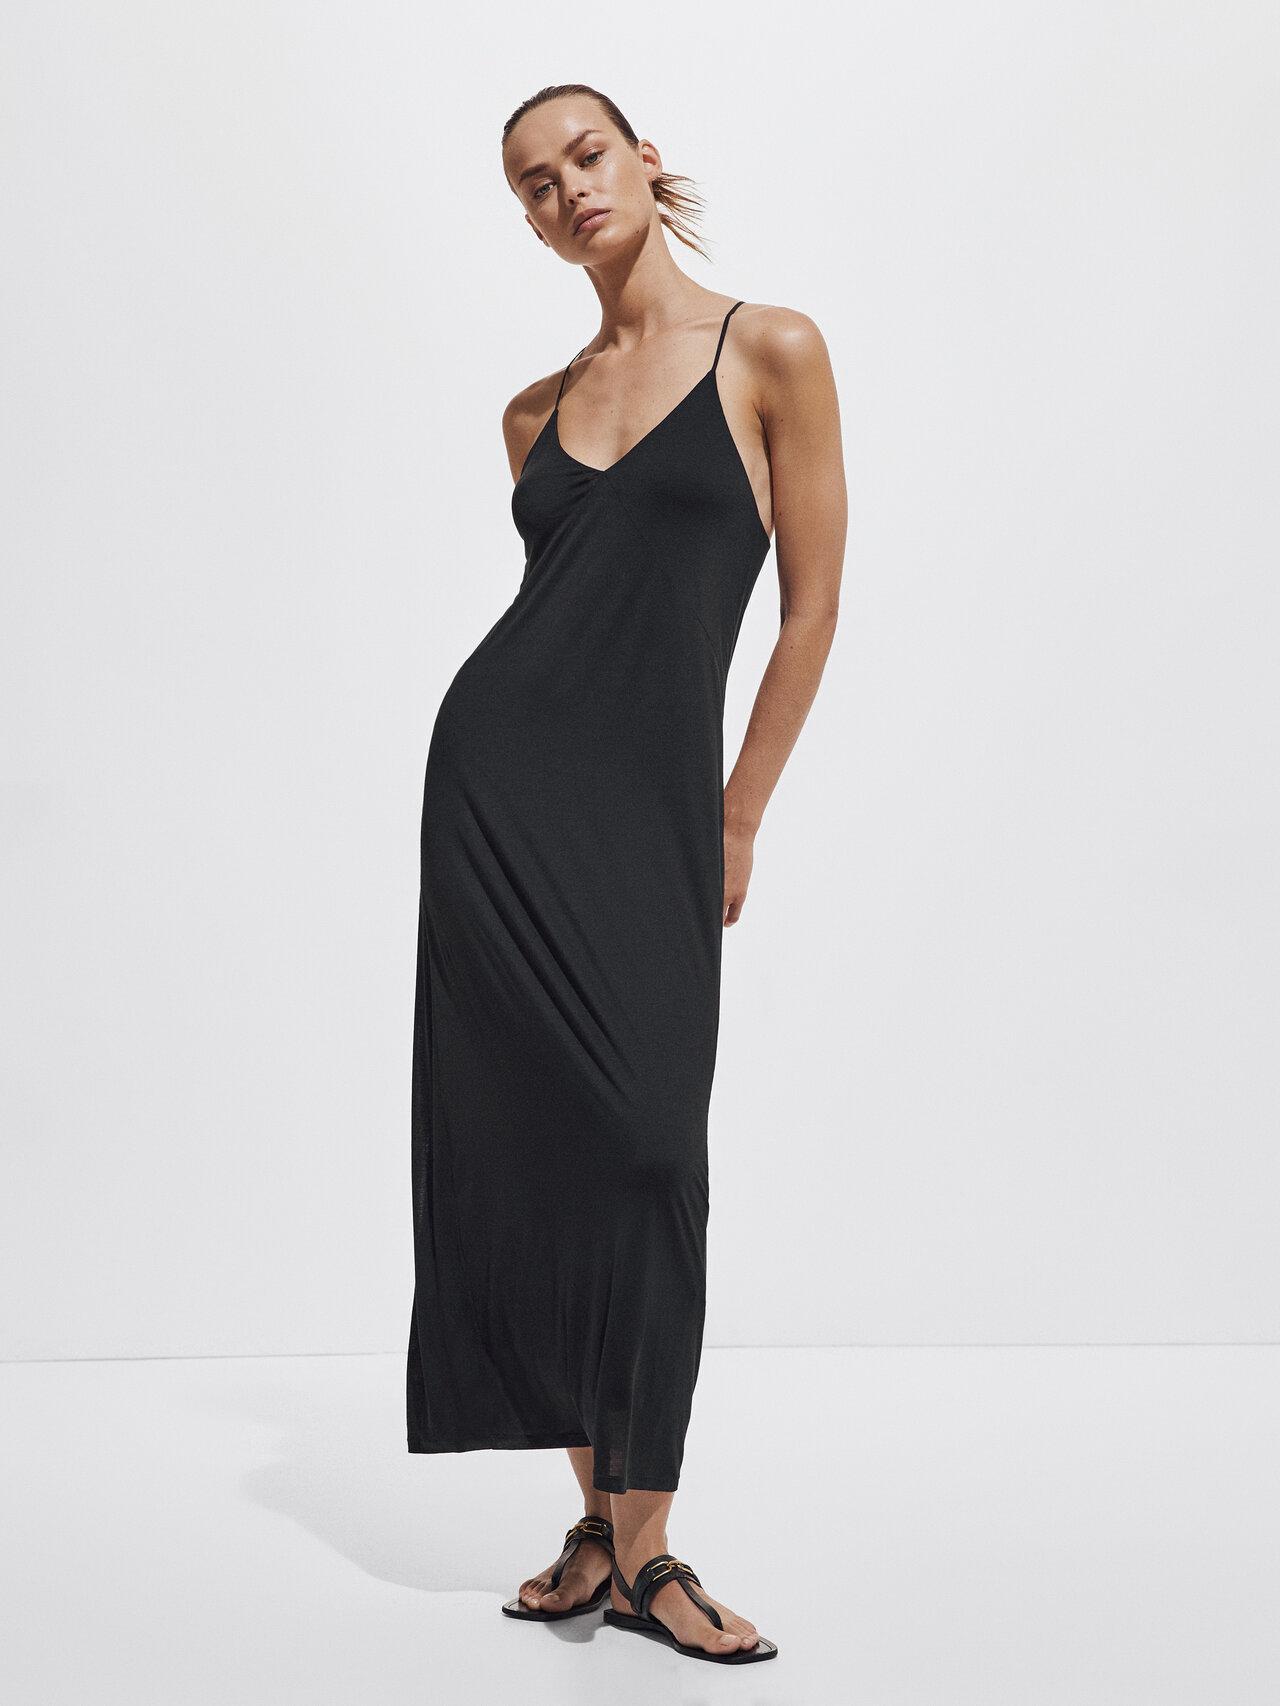 MASSIMO DUTTI Long Black Strappy Dress | Lyst